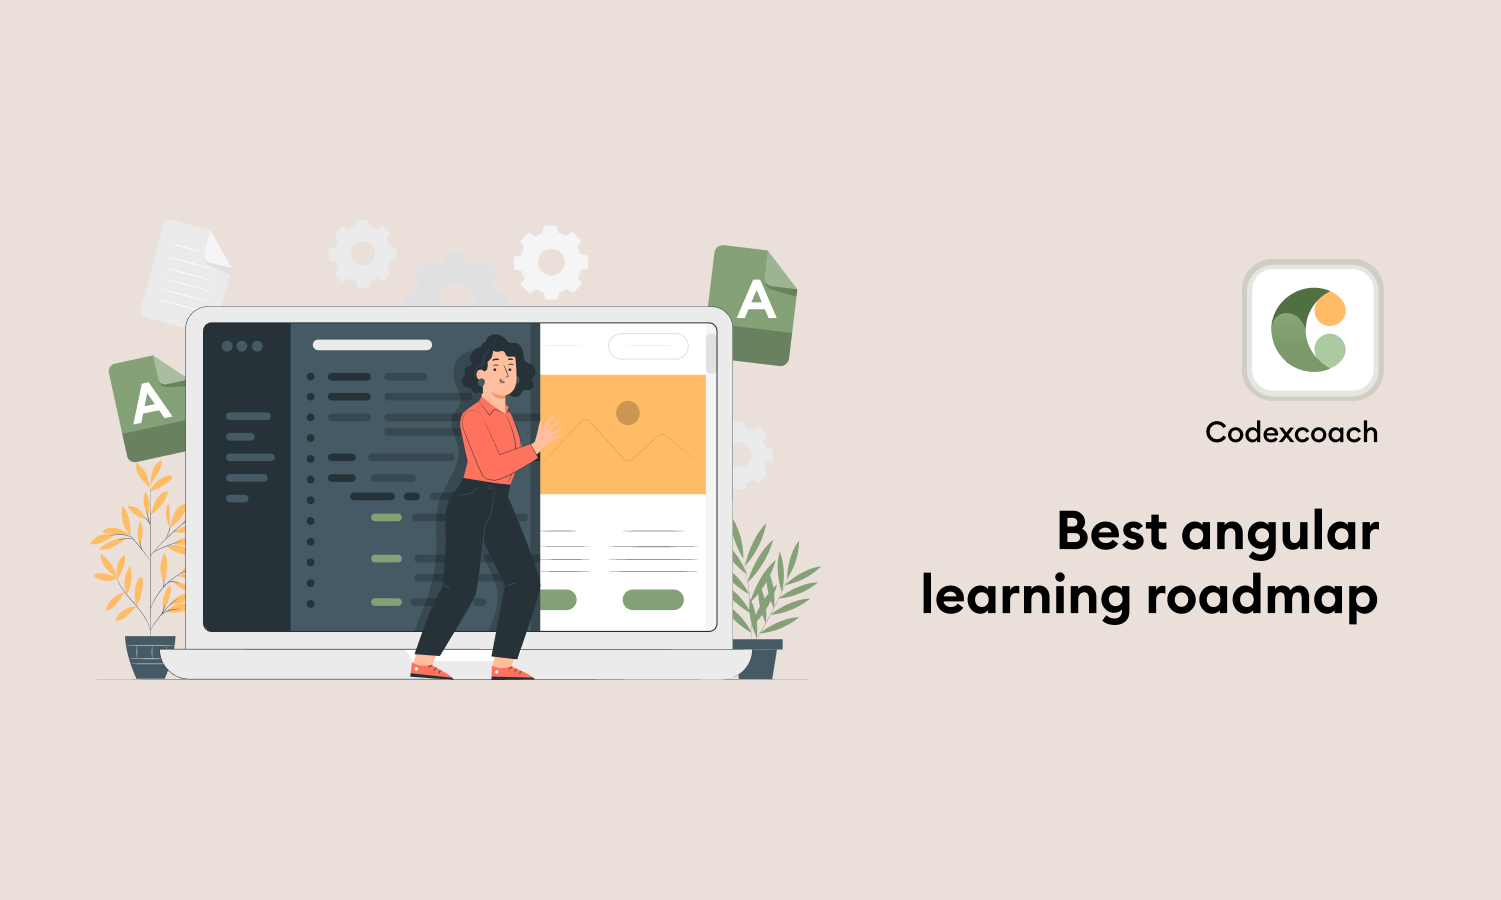 Best angular learning roadmap